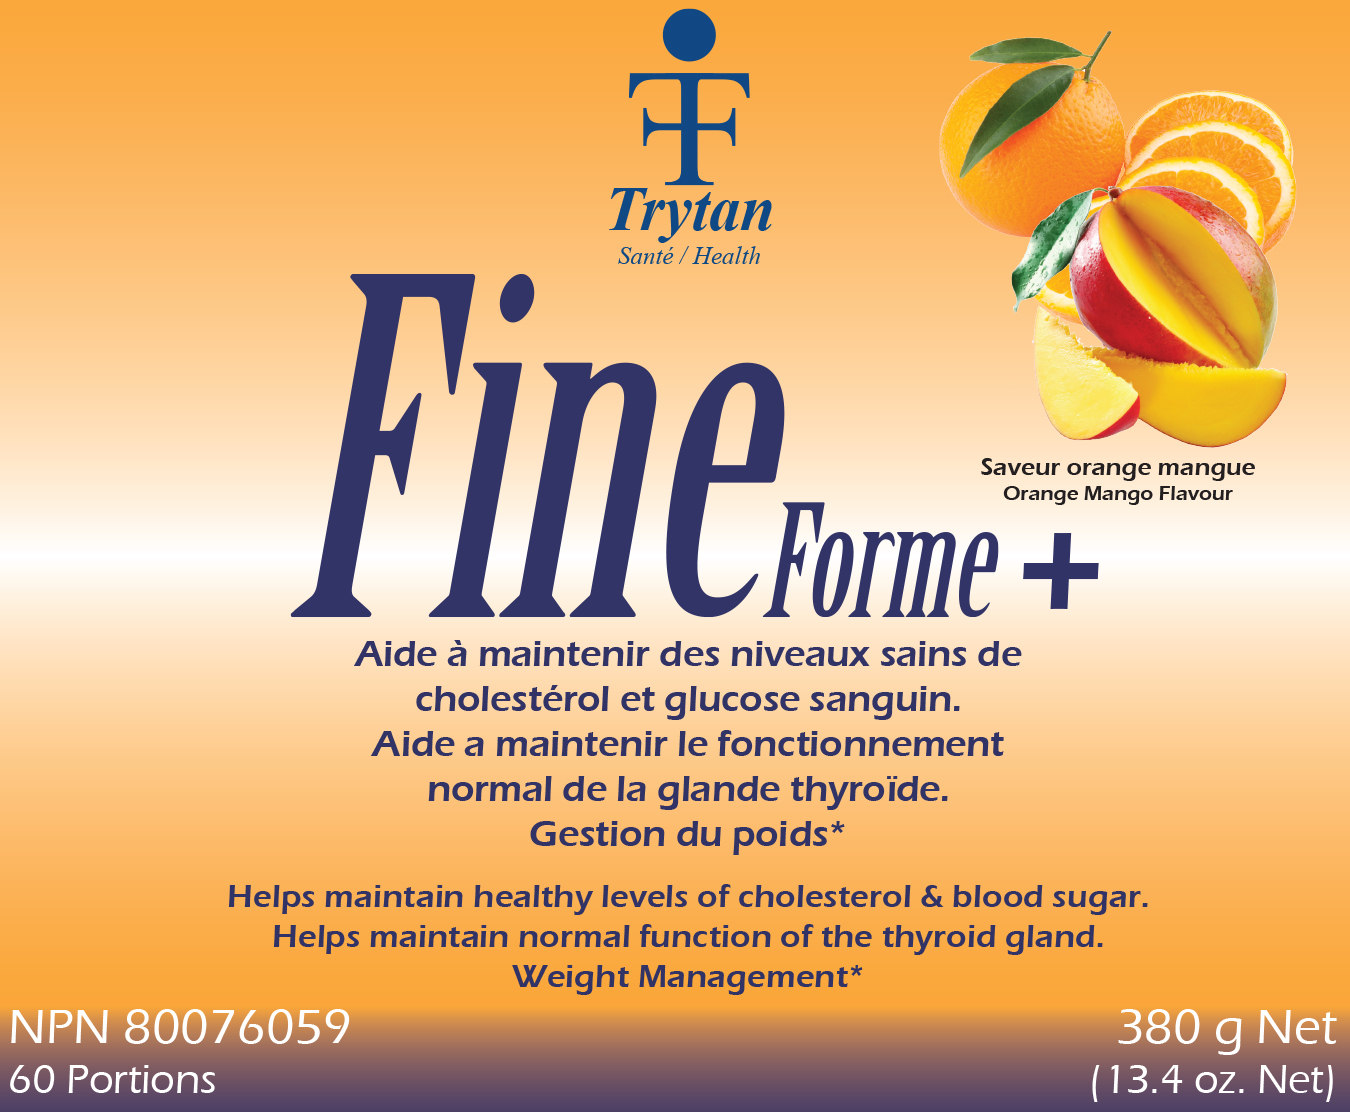 FineForme+